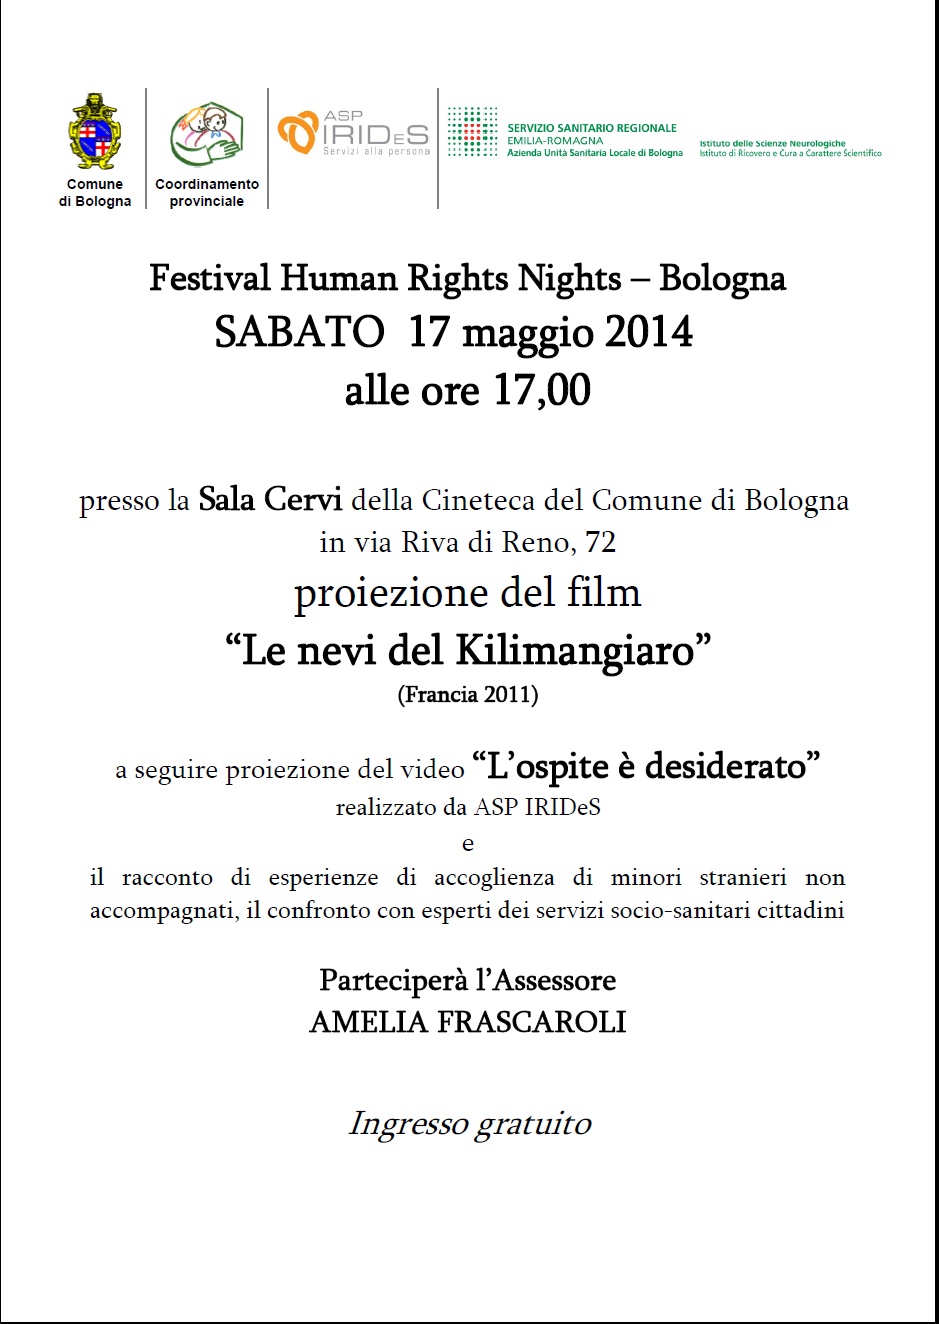 Festival Human Rights Nights 